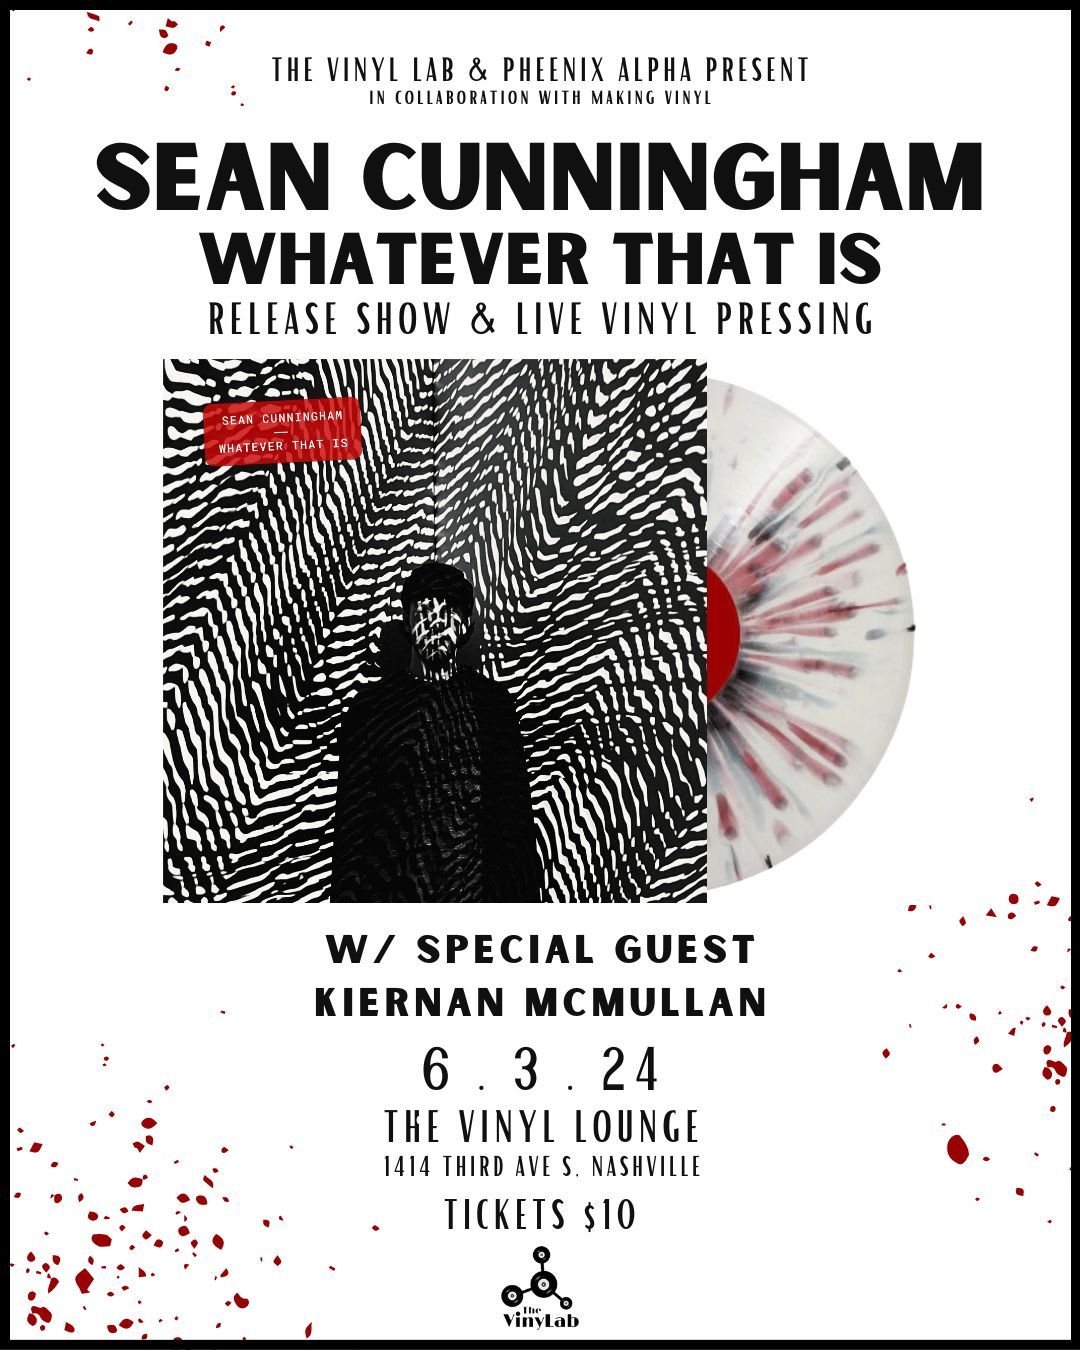 Sean Cunningham Release Show & Live Vinyl Pressing